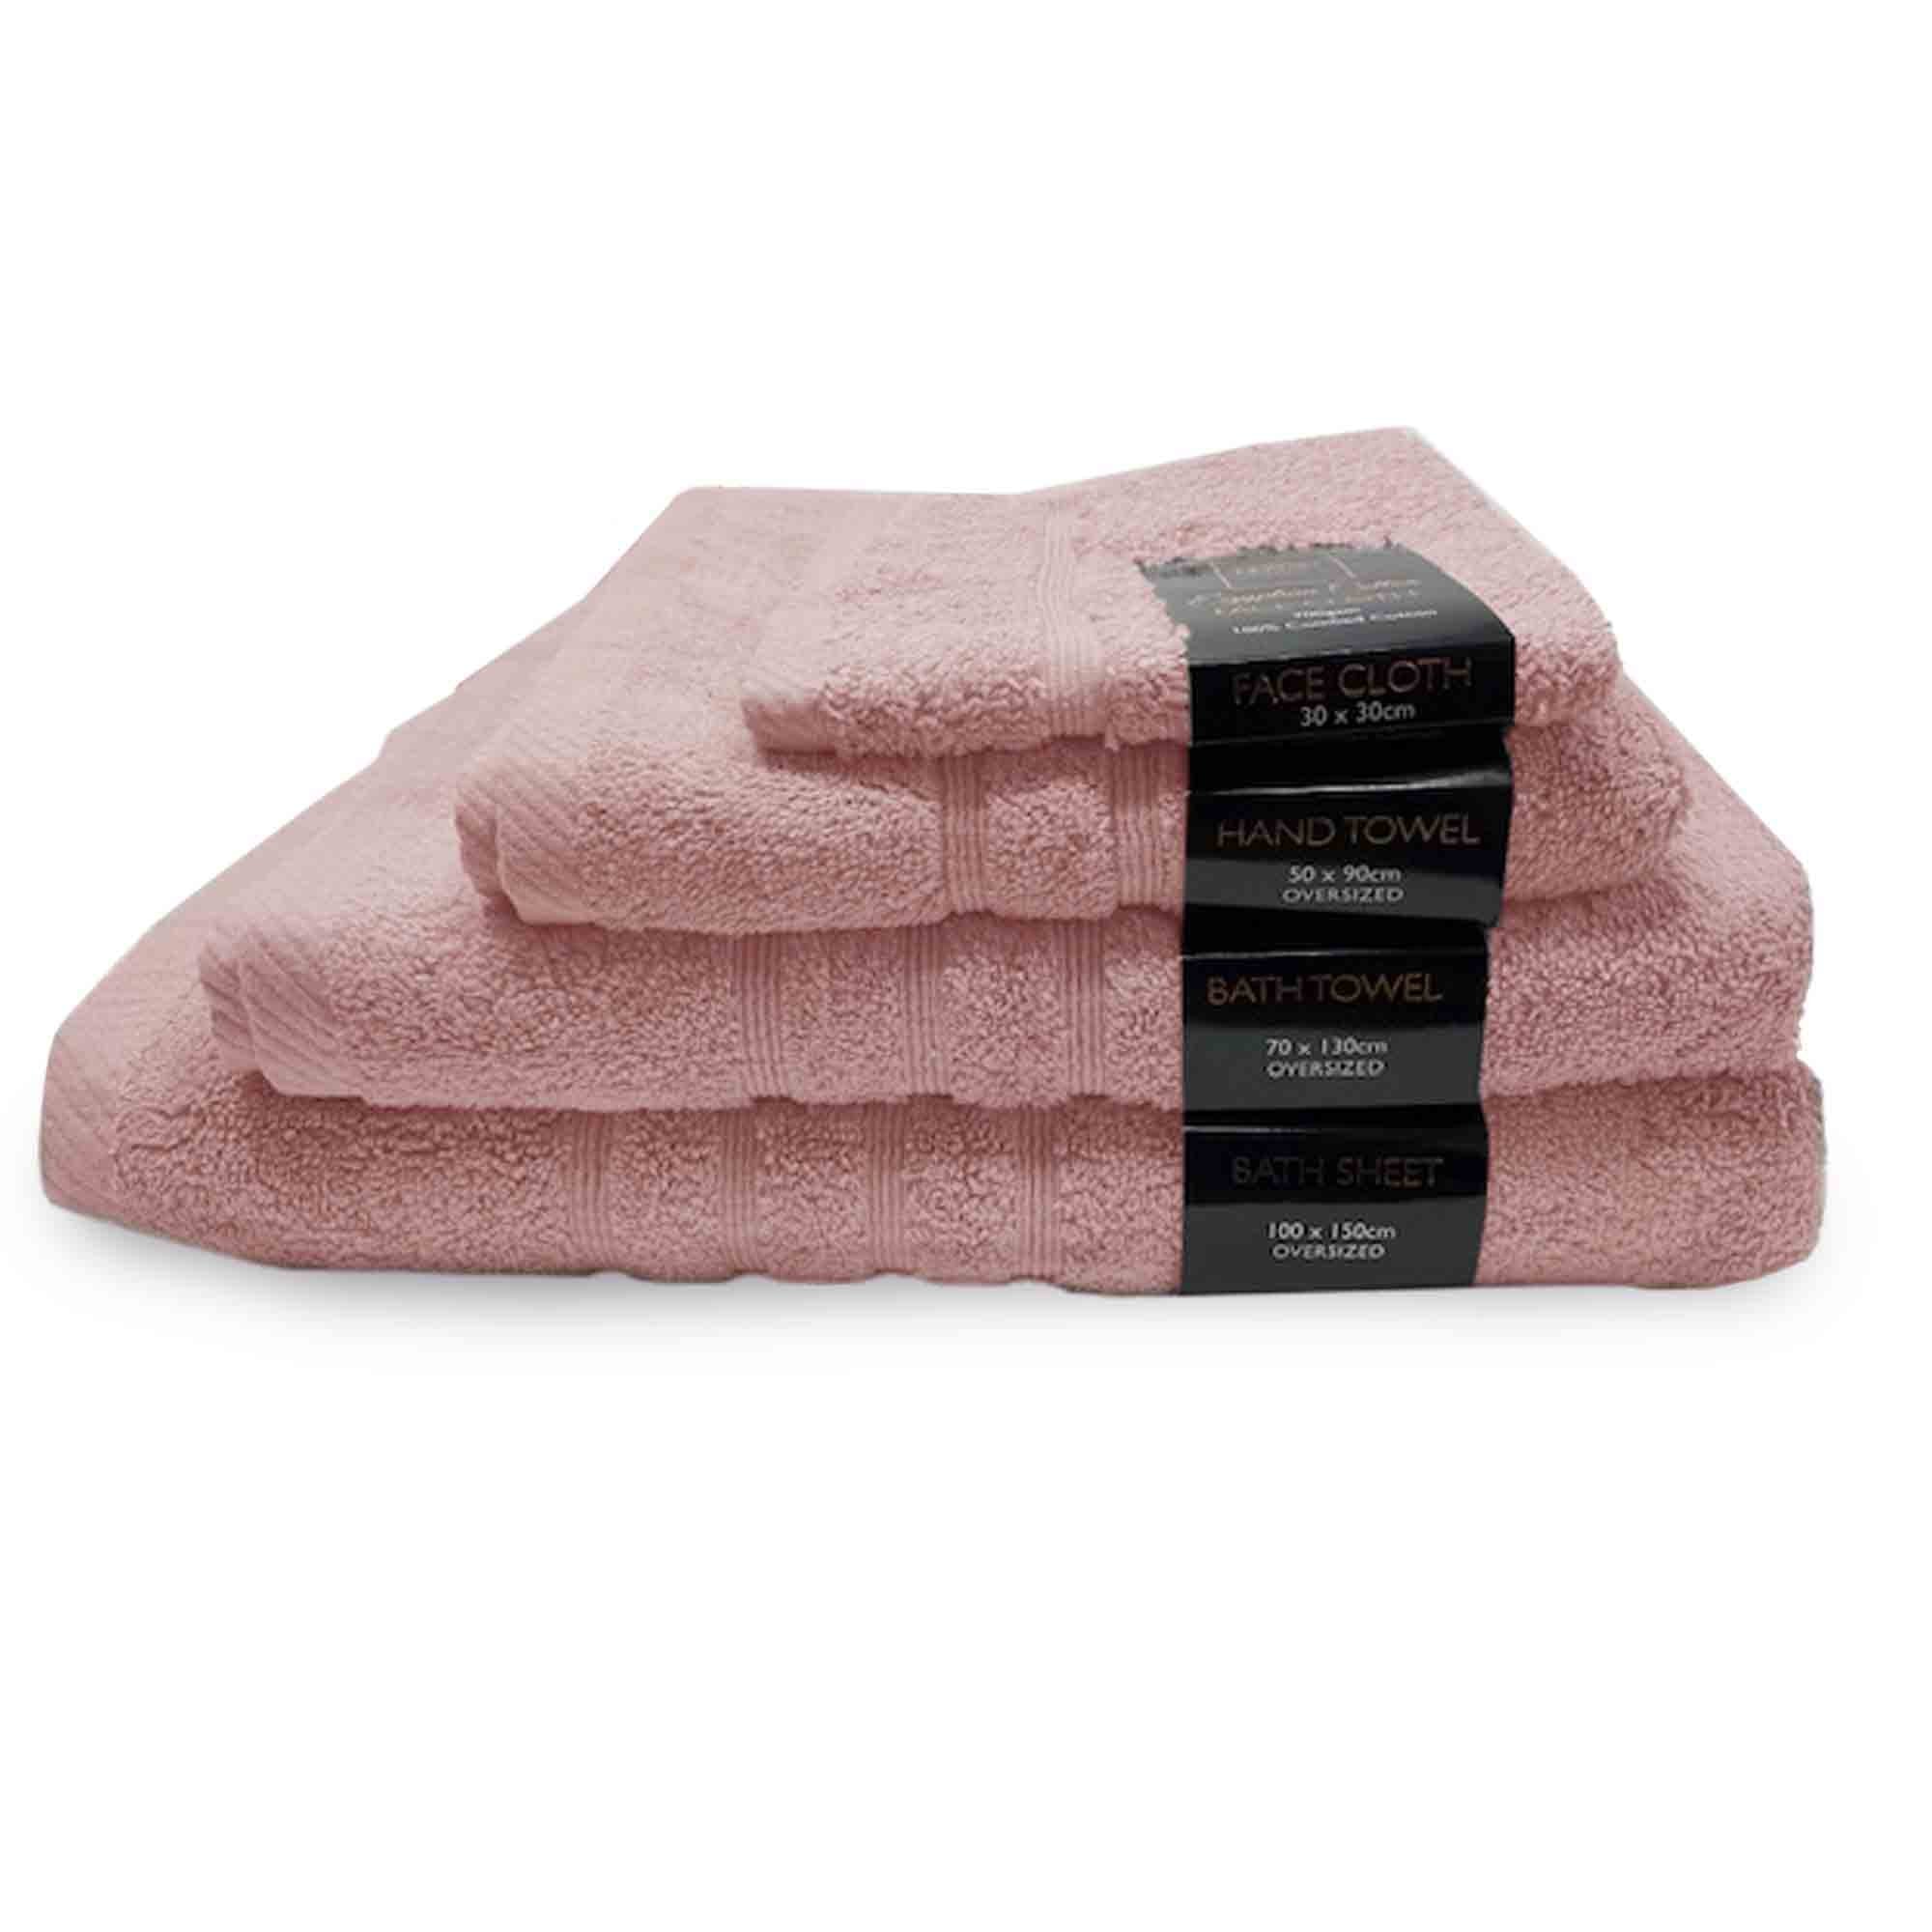 Lewis’s Luxury Egyptian 100% Cotton Towel Range - Blush Pink - Face Cloth  | TJ Hughes